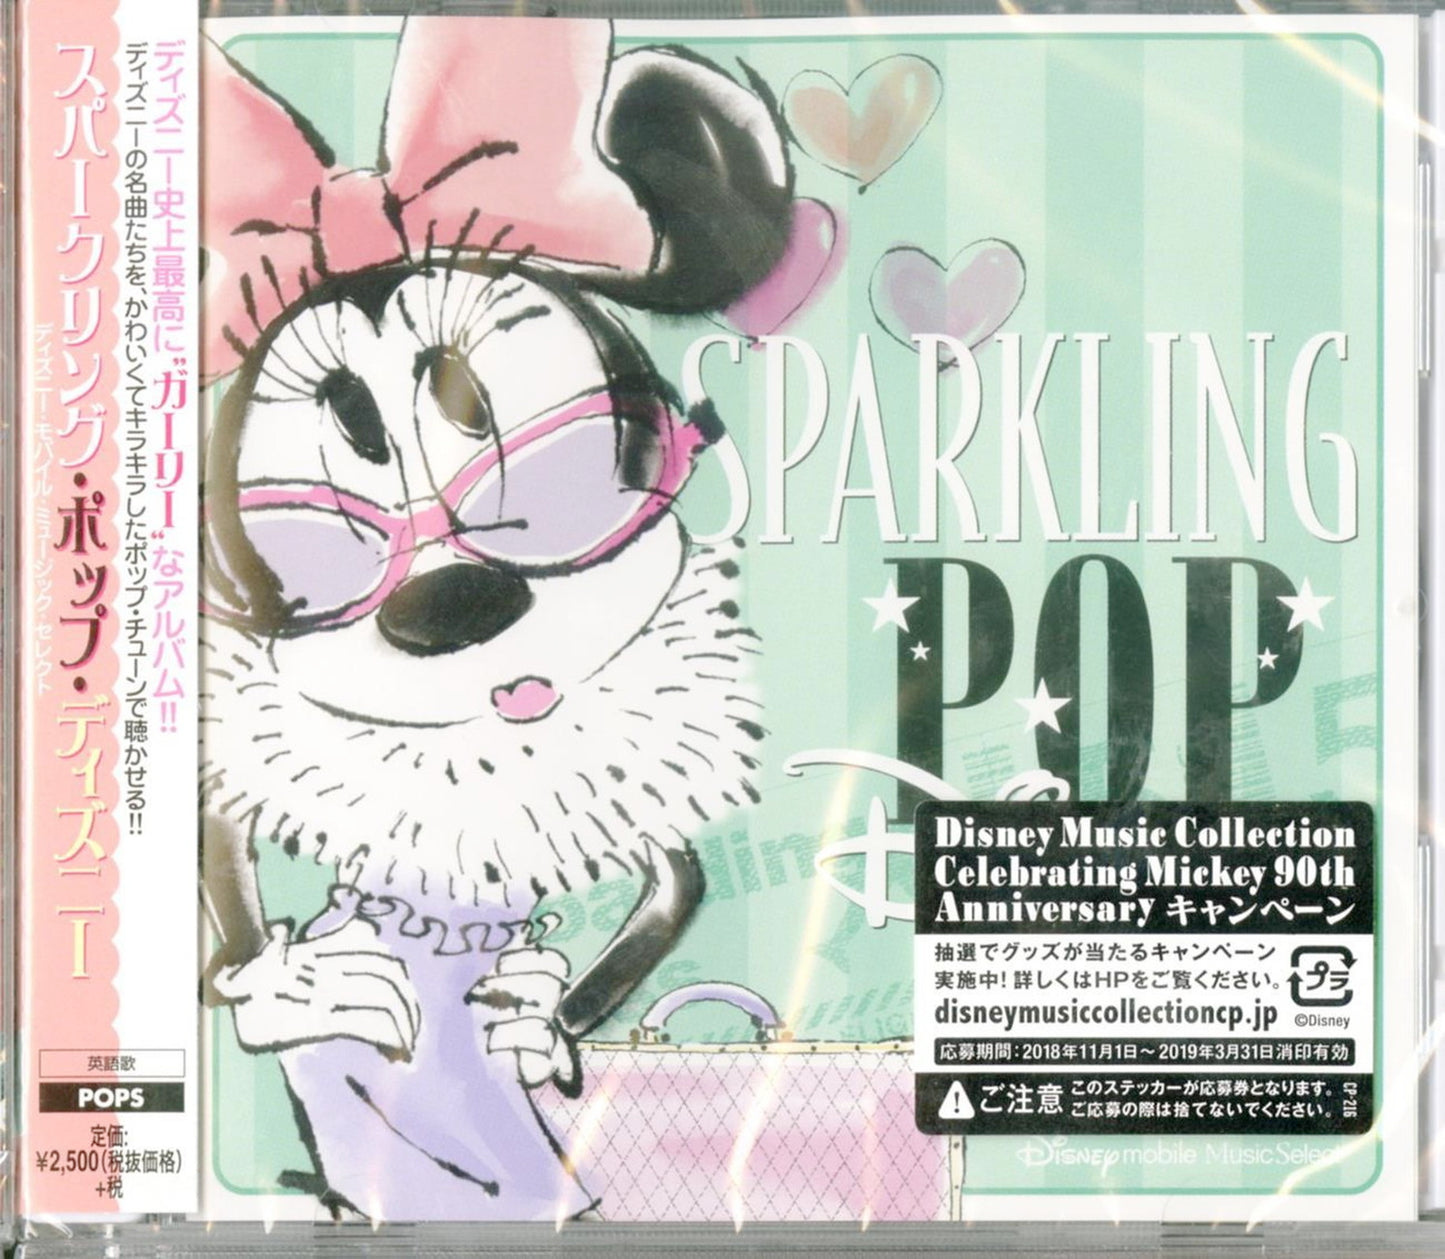 Ost - Sparkling Pop Disney Disney Mobile Music Select - Japan CD